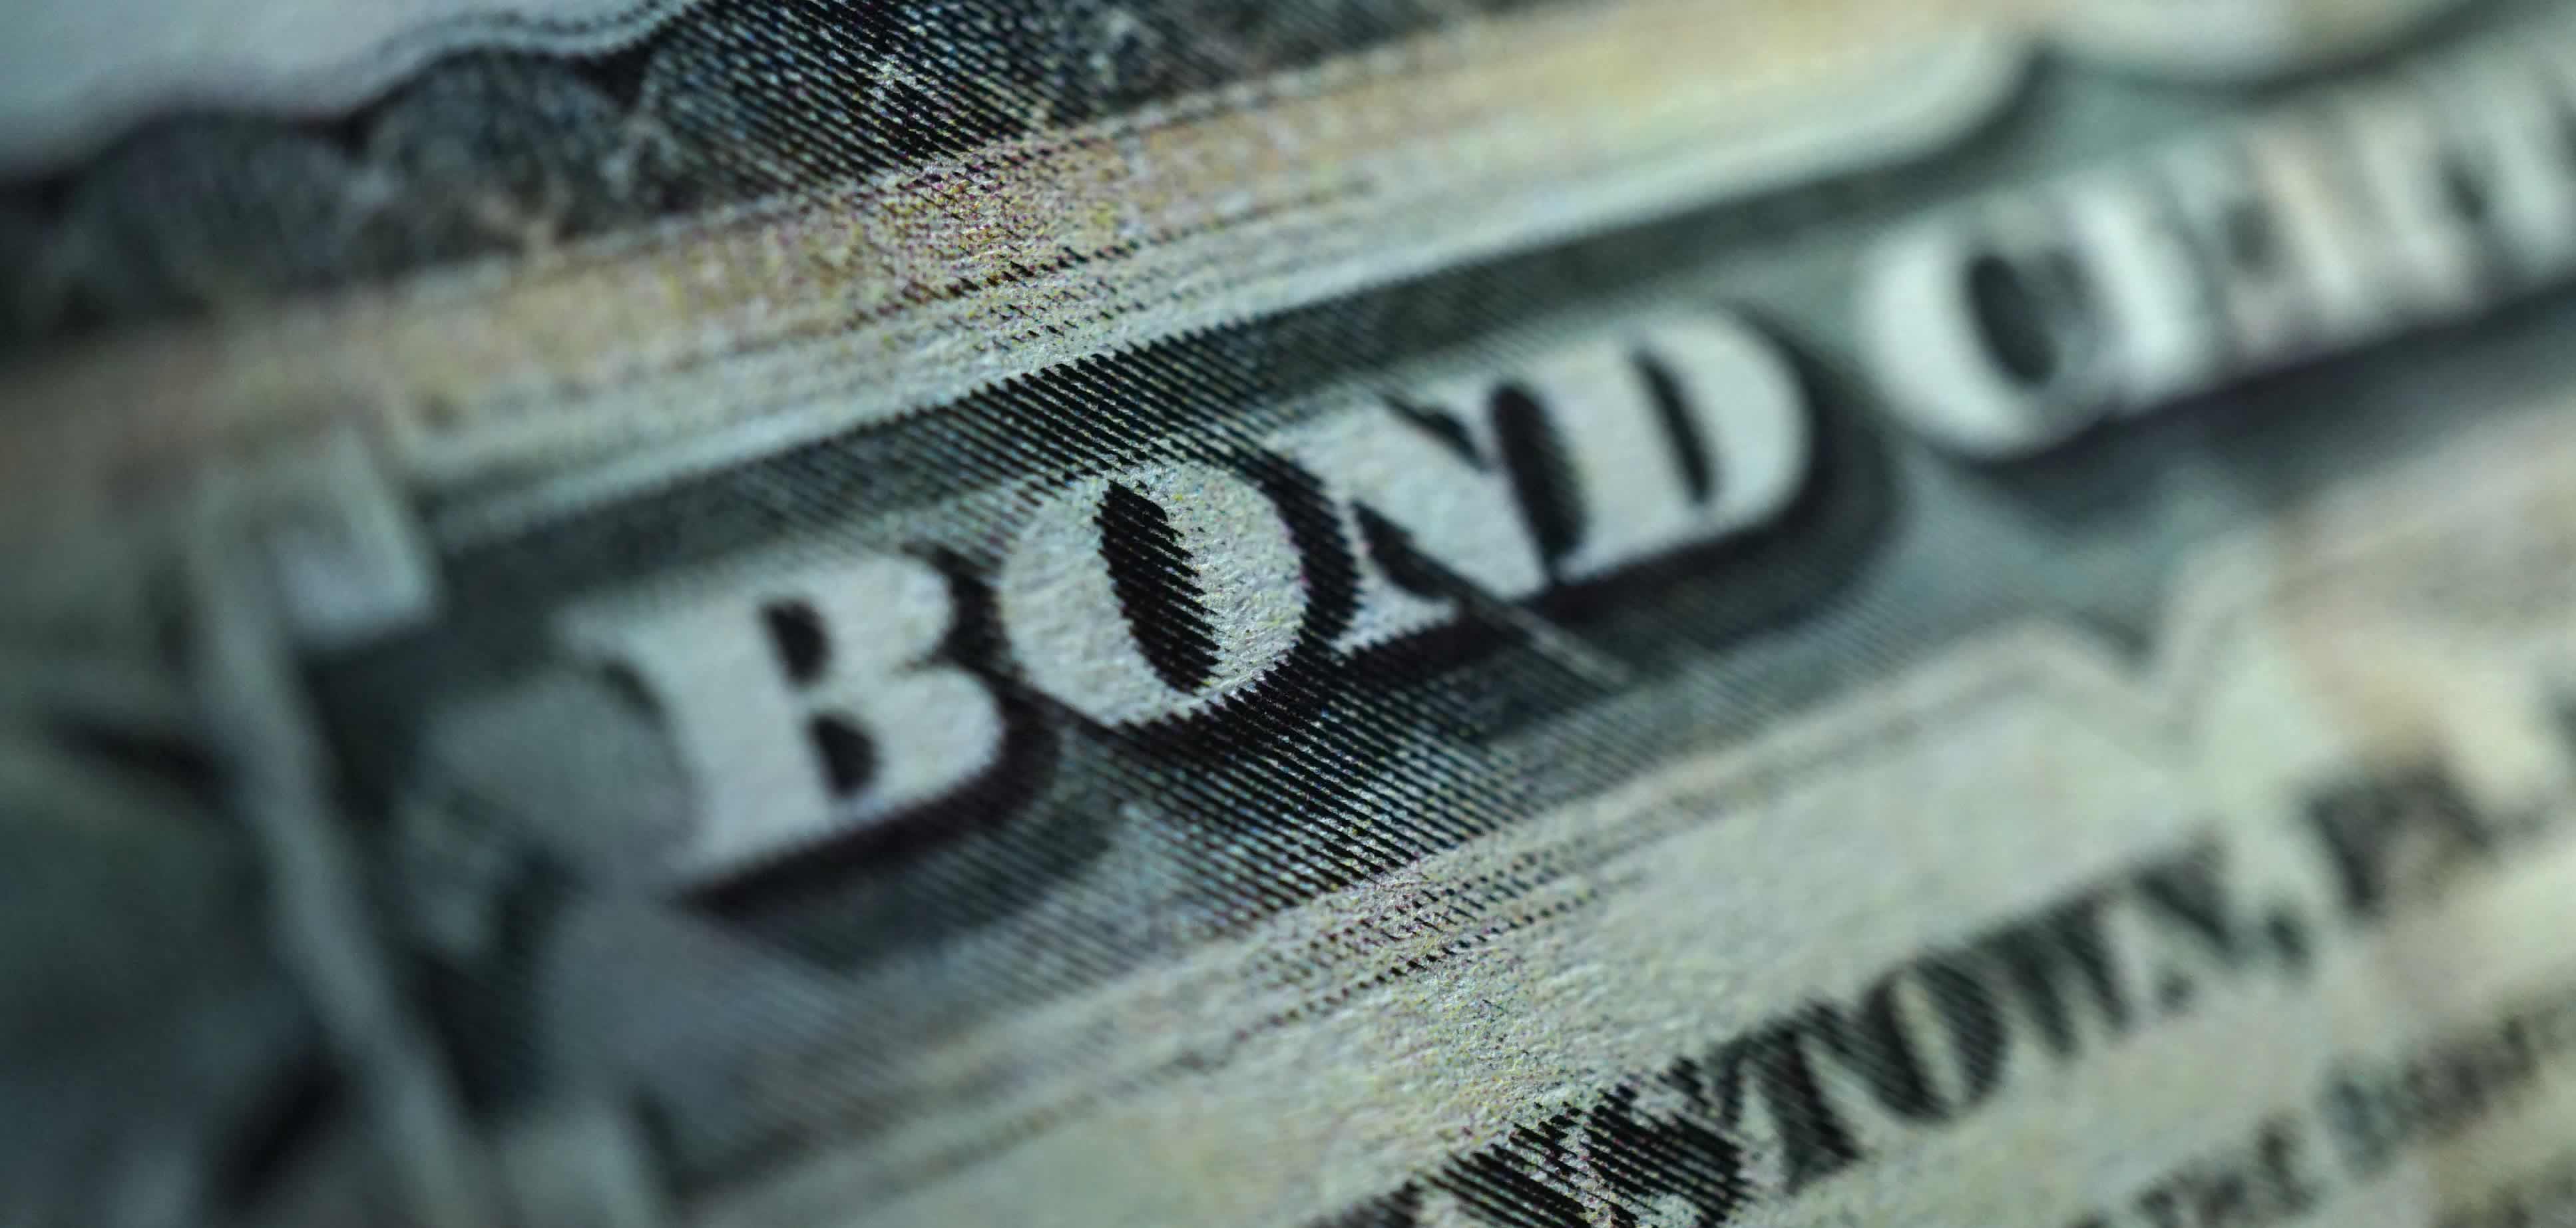 Bond Guide: How to Raise Bond Levels